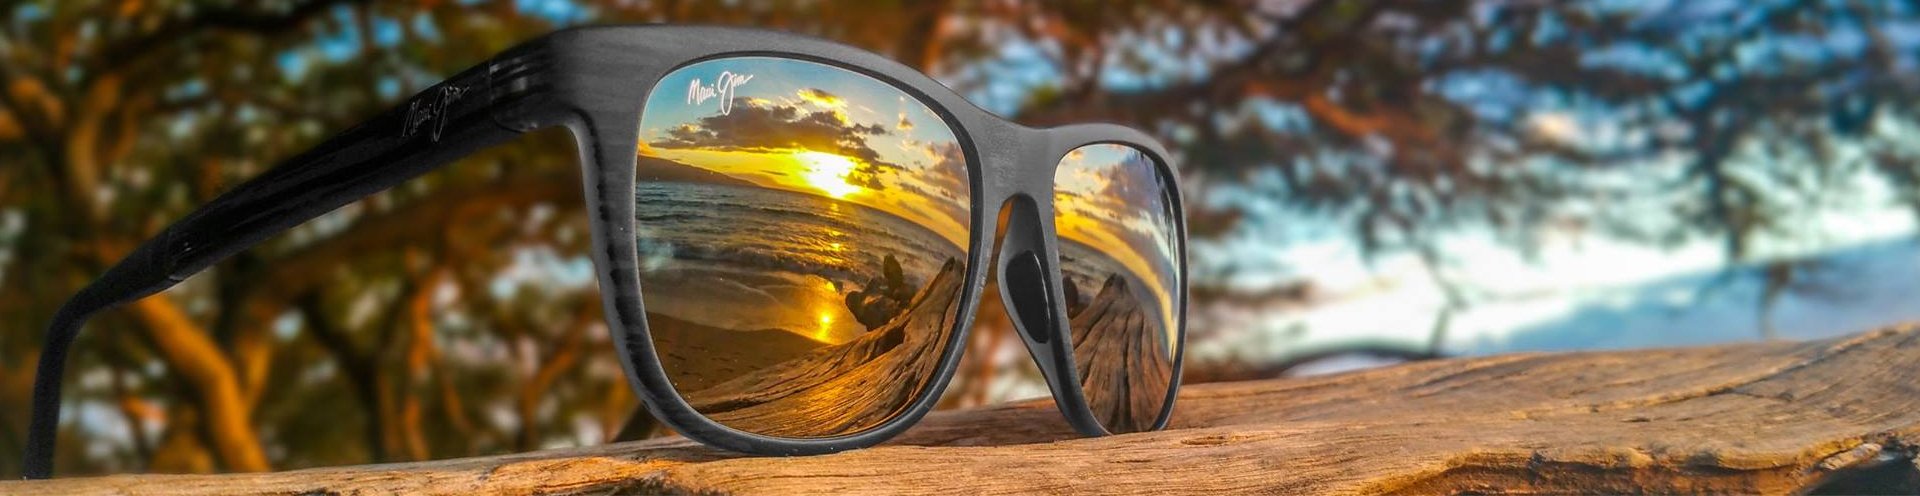 Maui Jim Island Eyes Sunglasses: Models 859-11B, B859-17, H859-16,  RM859-02D - Flight Sunglasses